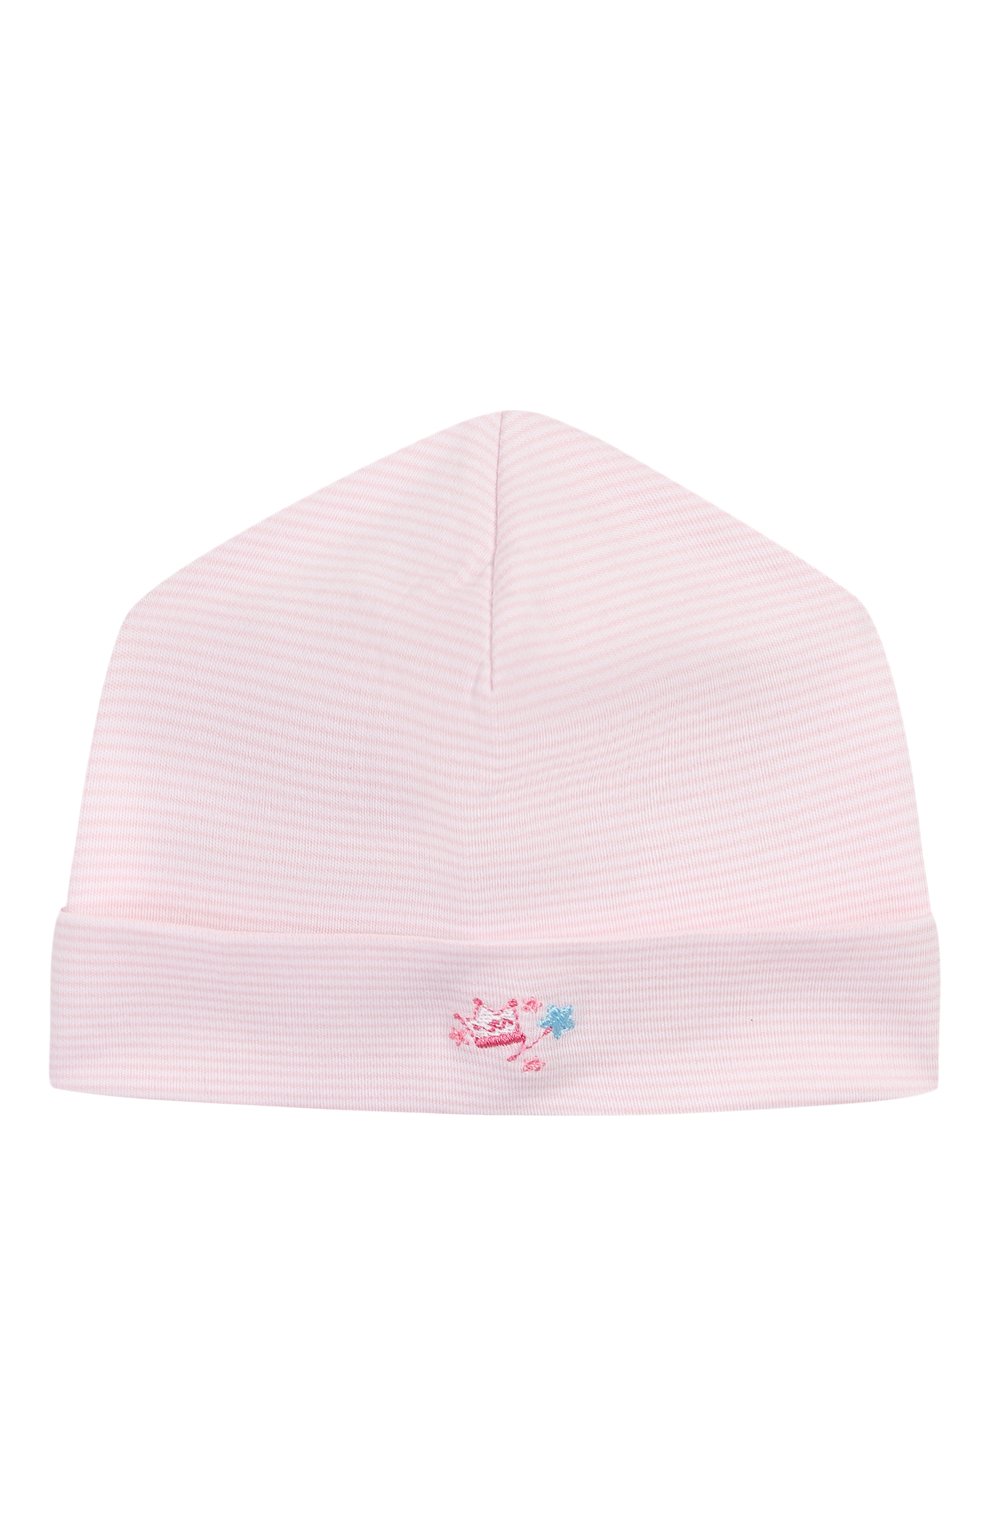 Детского хлопковая шапка KISSY KISSY розового цвета, арт. KG504447N | Фото 1 (Материал: Текстиль, Хлопок; Кросс-КТ НВ: Шапочки-аксессуары)